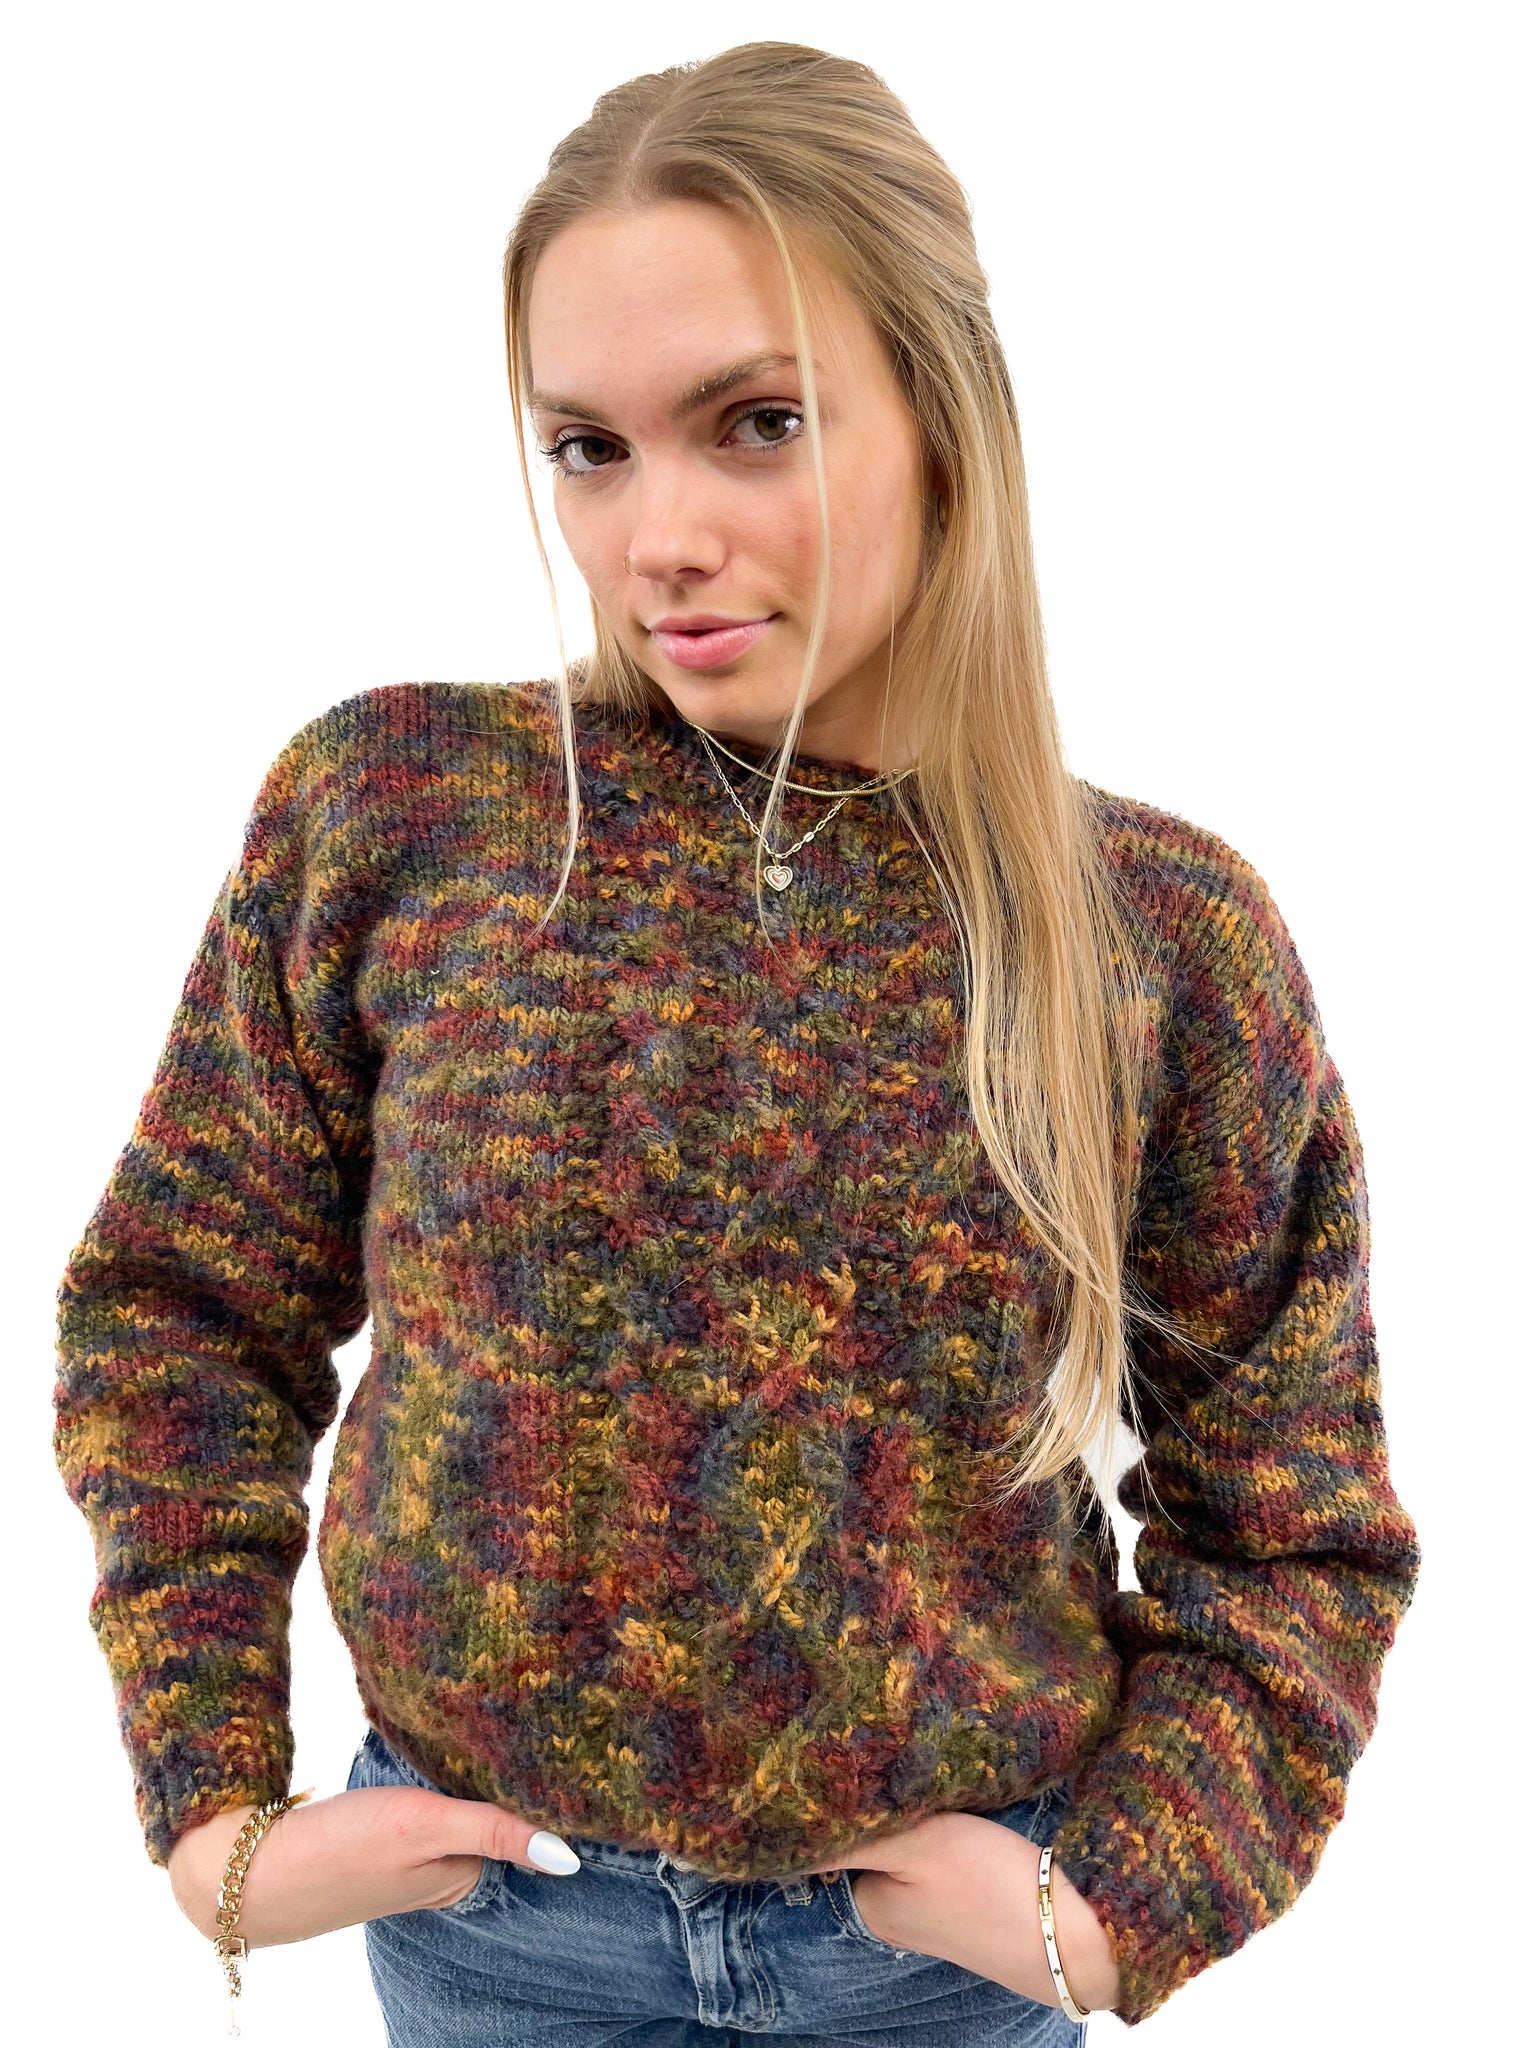 90s Sweater